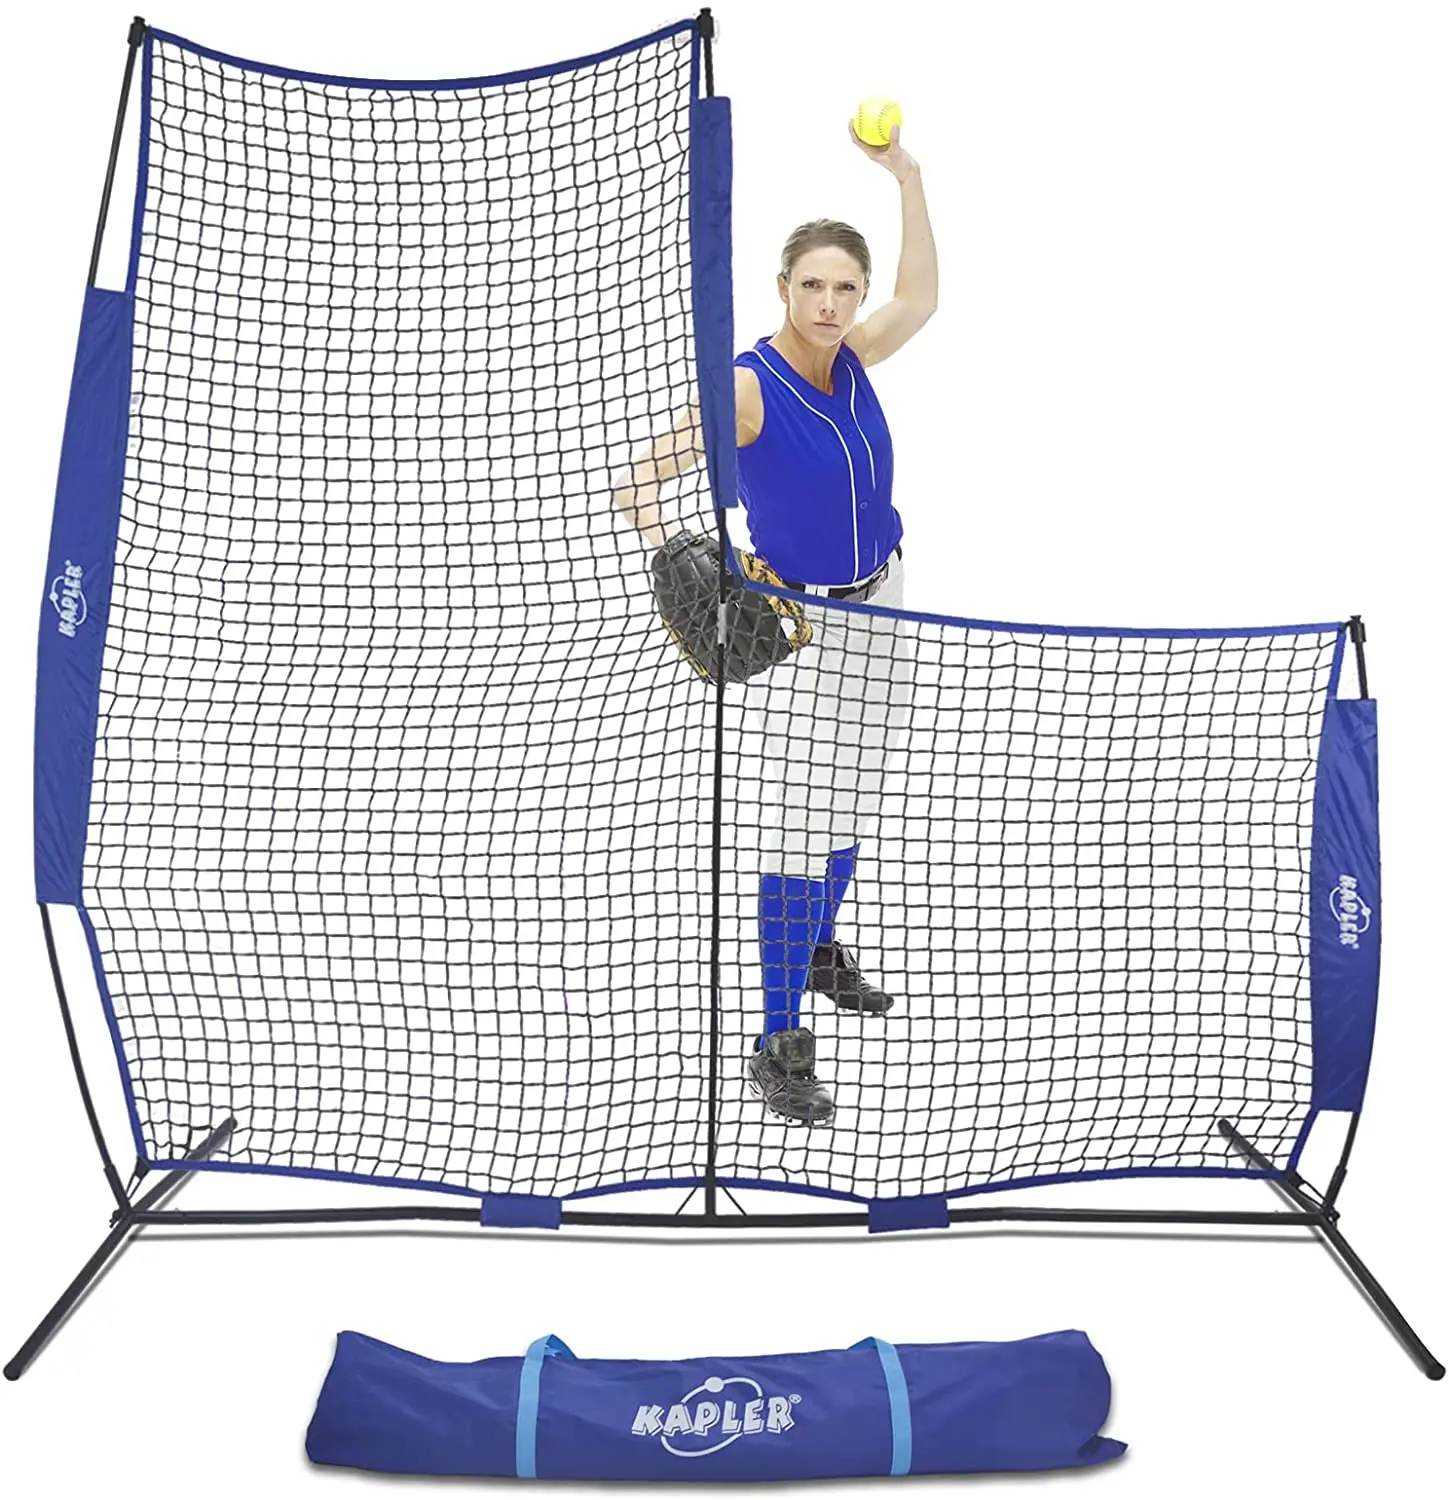 Kapler Baseball & Softball Practice Hitting Net with Carry Bag for Adults Batting Pitching7x7FT